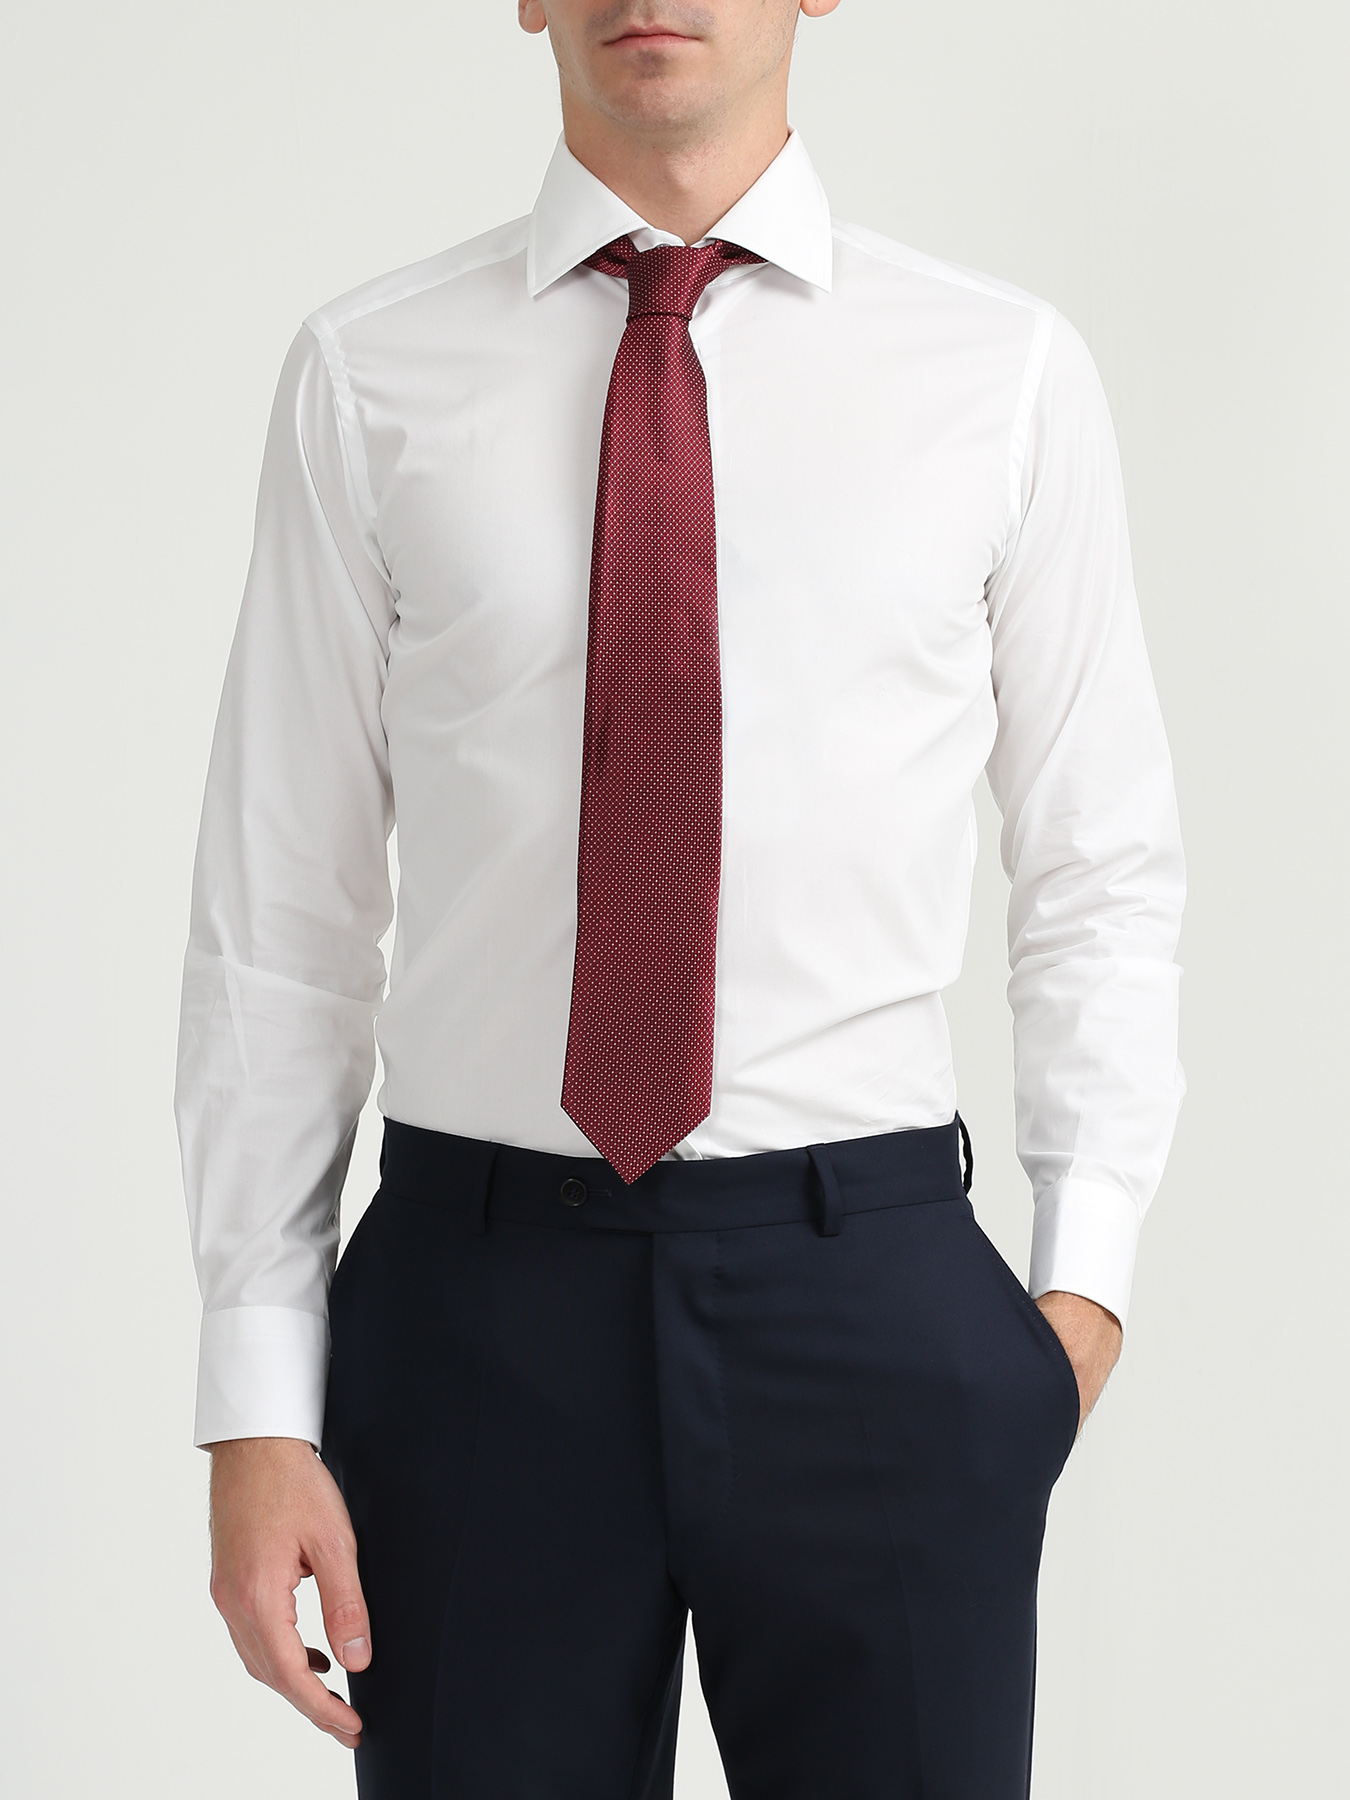 Ritter Шелковый галстук с узорами 323009-185